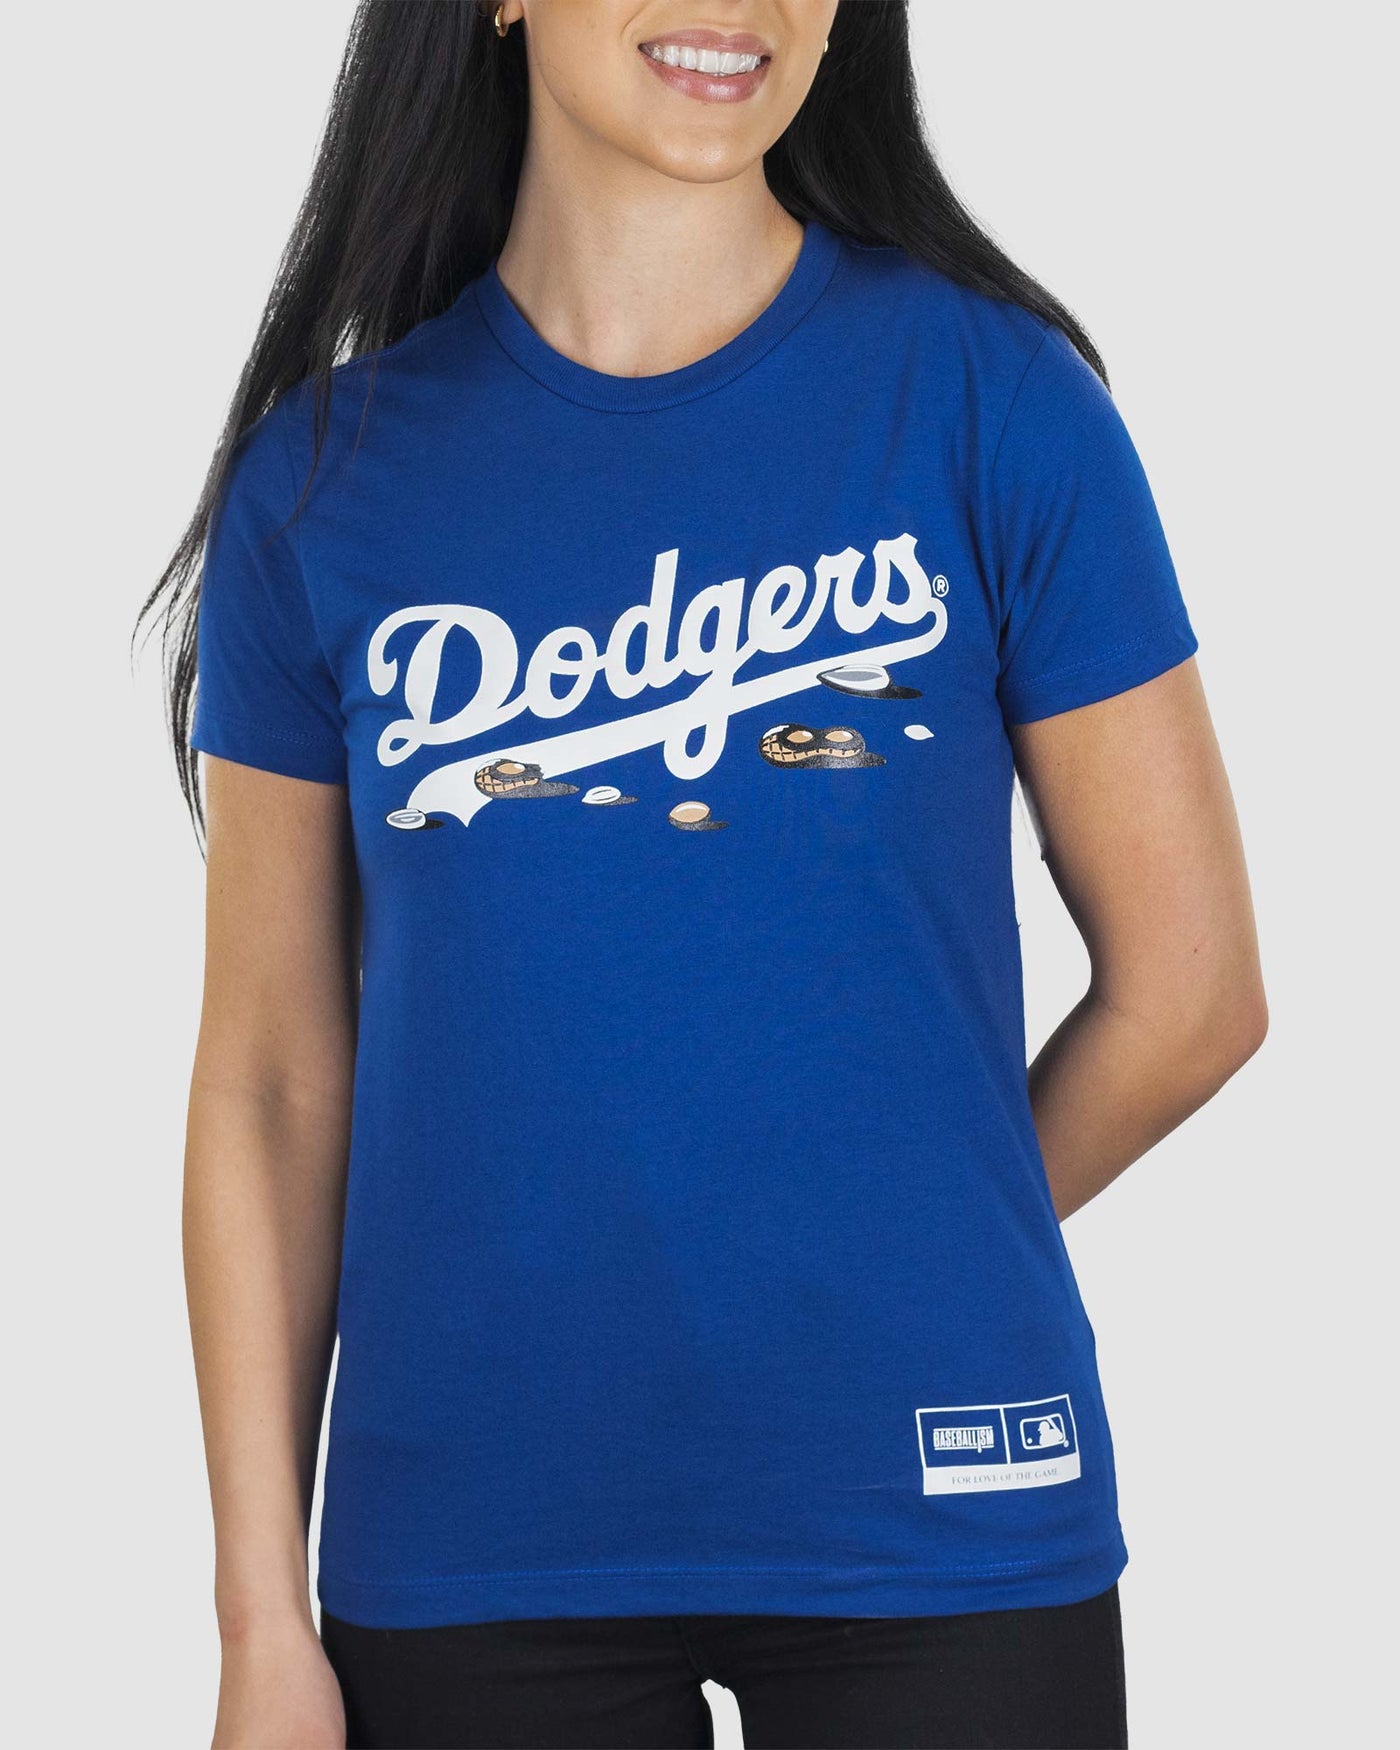 Dodgers Shirt - Custom Dodgers Logo - Dodgers gifts - Dodgers Christmas